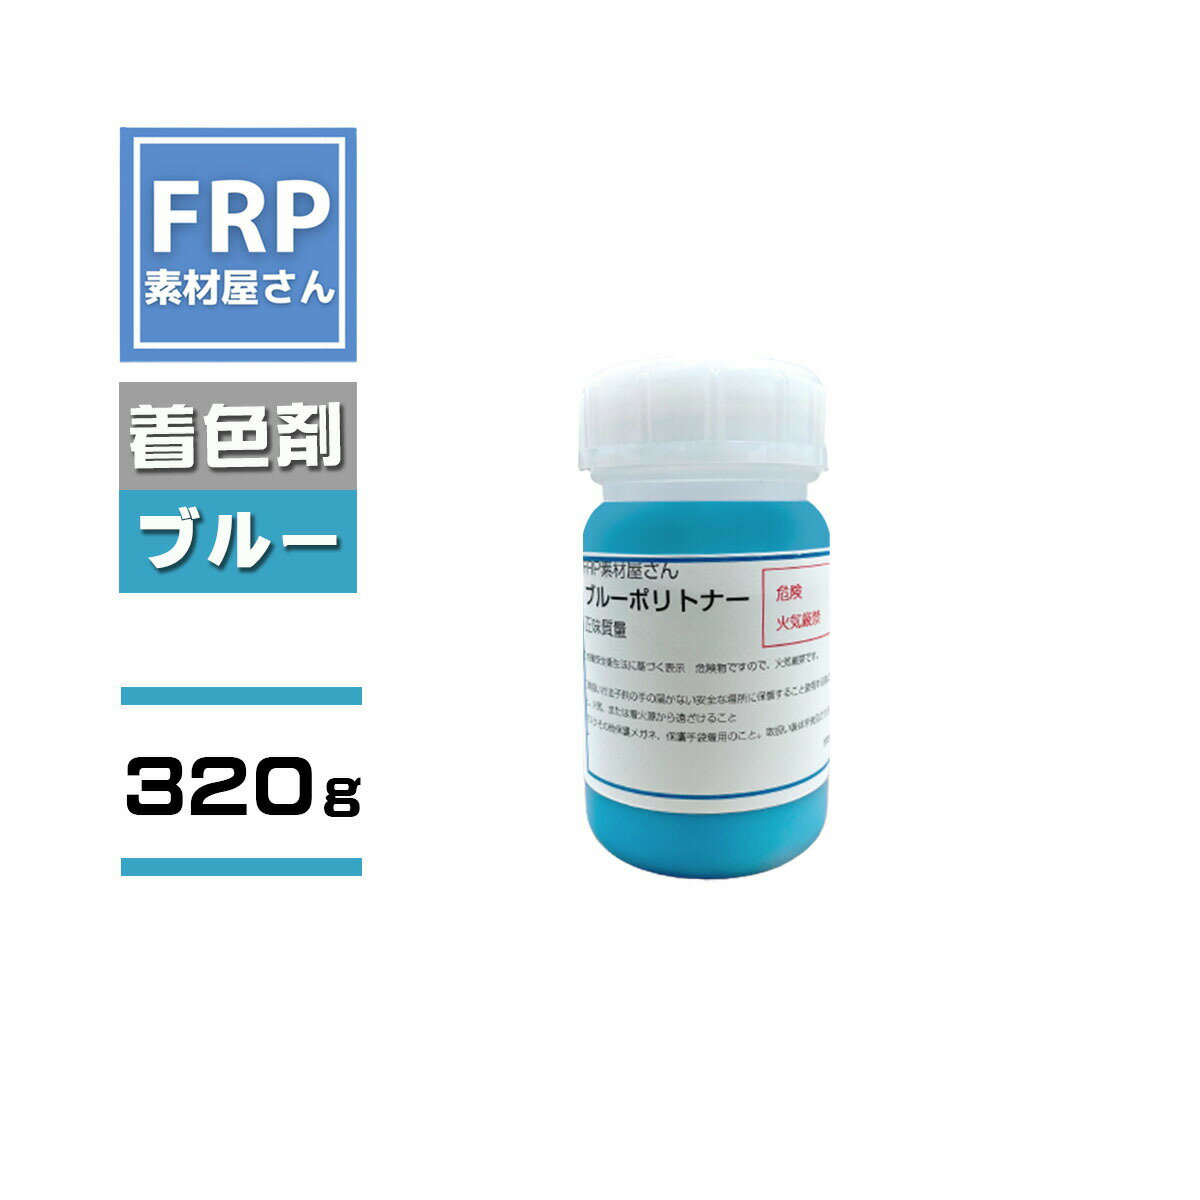 FRP樹脂専用着色顔料【ポリトナー 